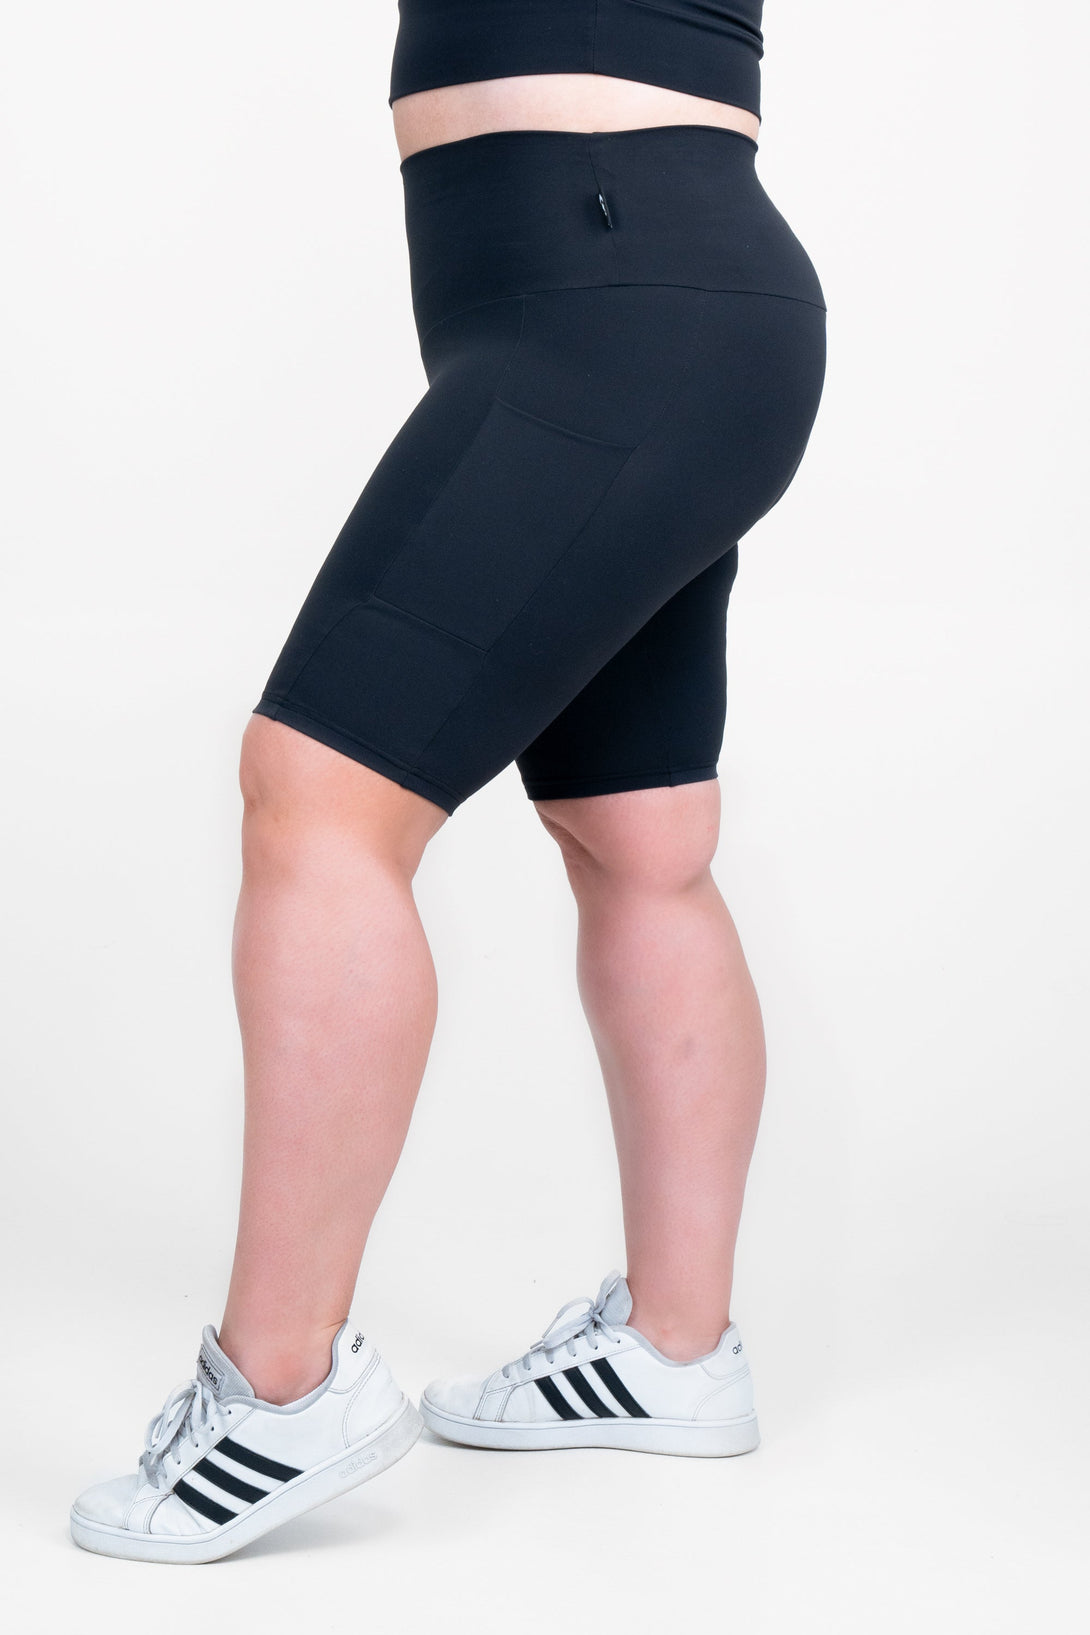 Black Body Contouring - Panel Pocket High Waisted Long Shorts-Activewear-Exoticathletica